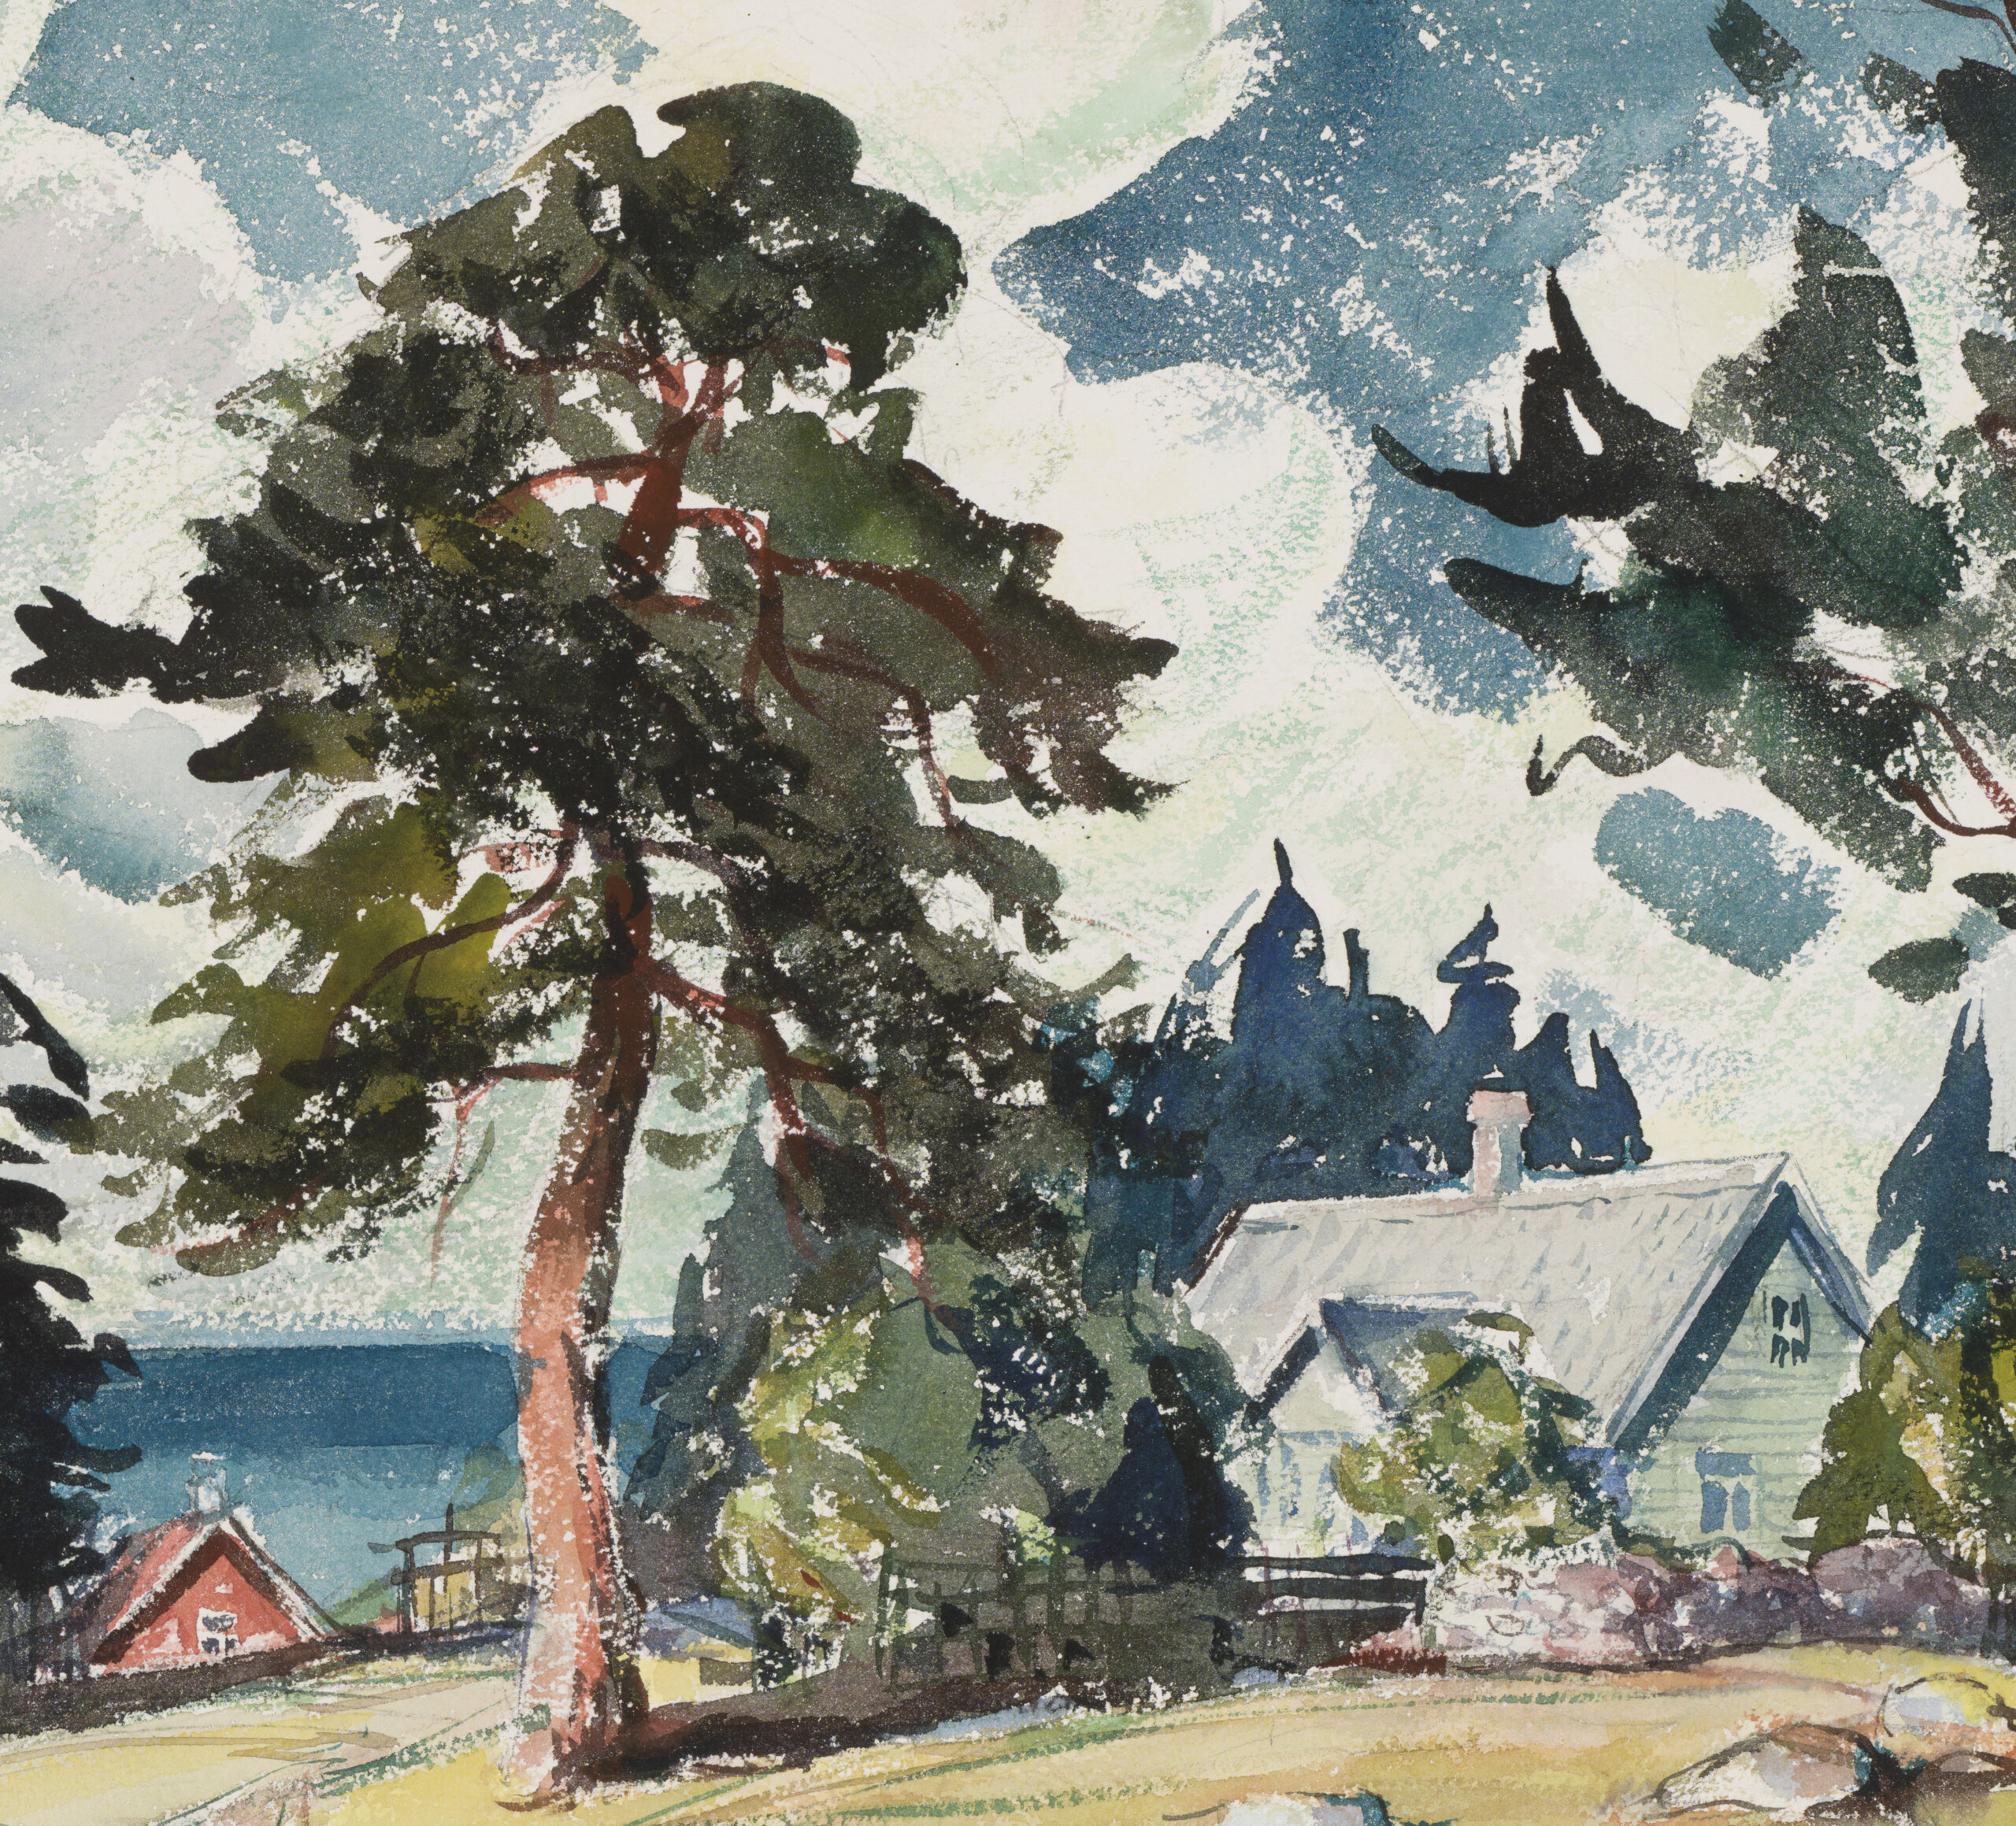 Richard Uutmaa “Altja rannaküla”, 1967. 53 x 73 cm.